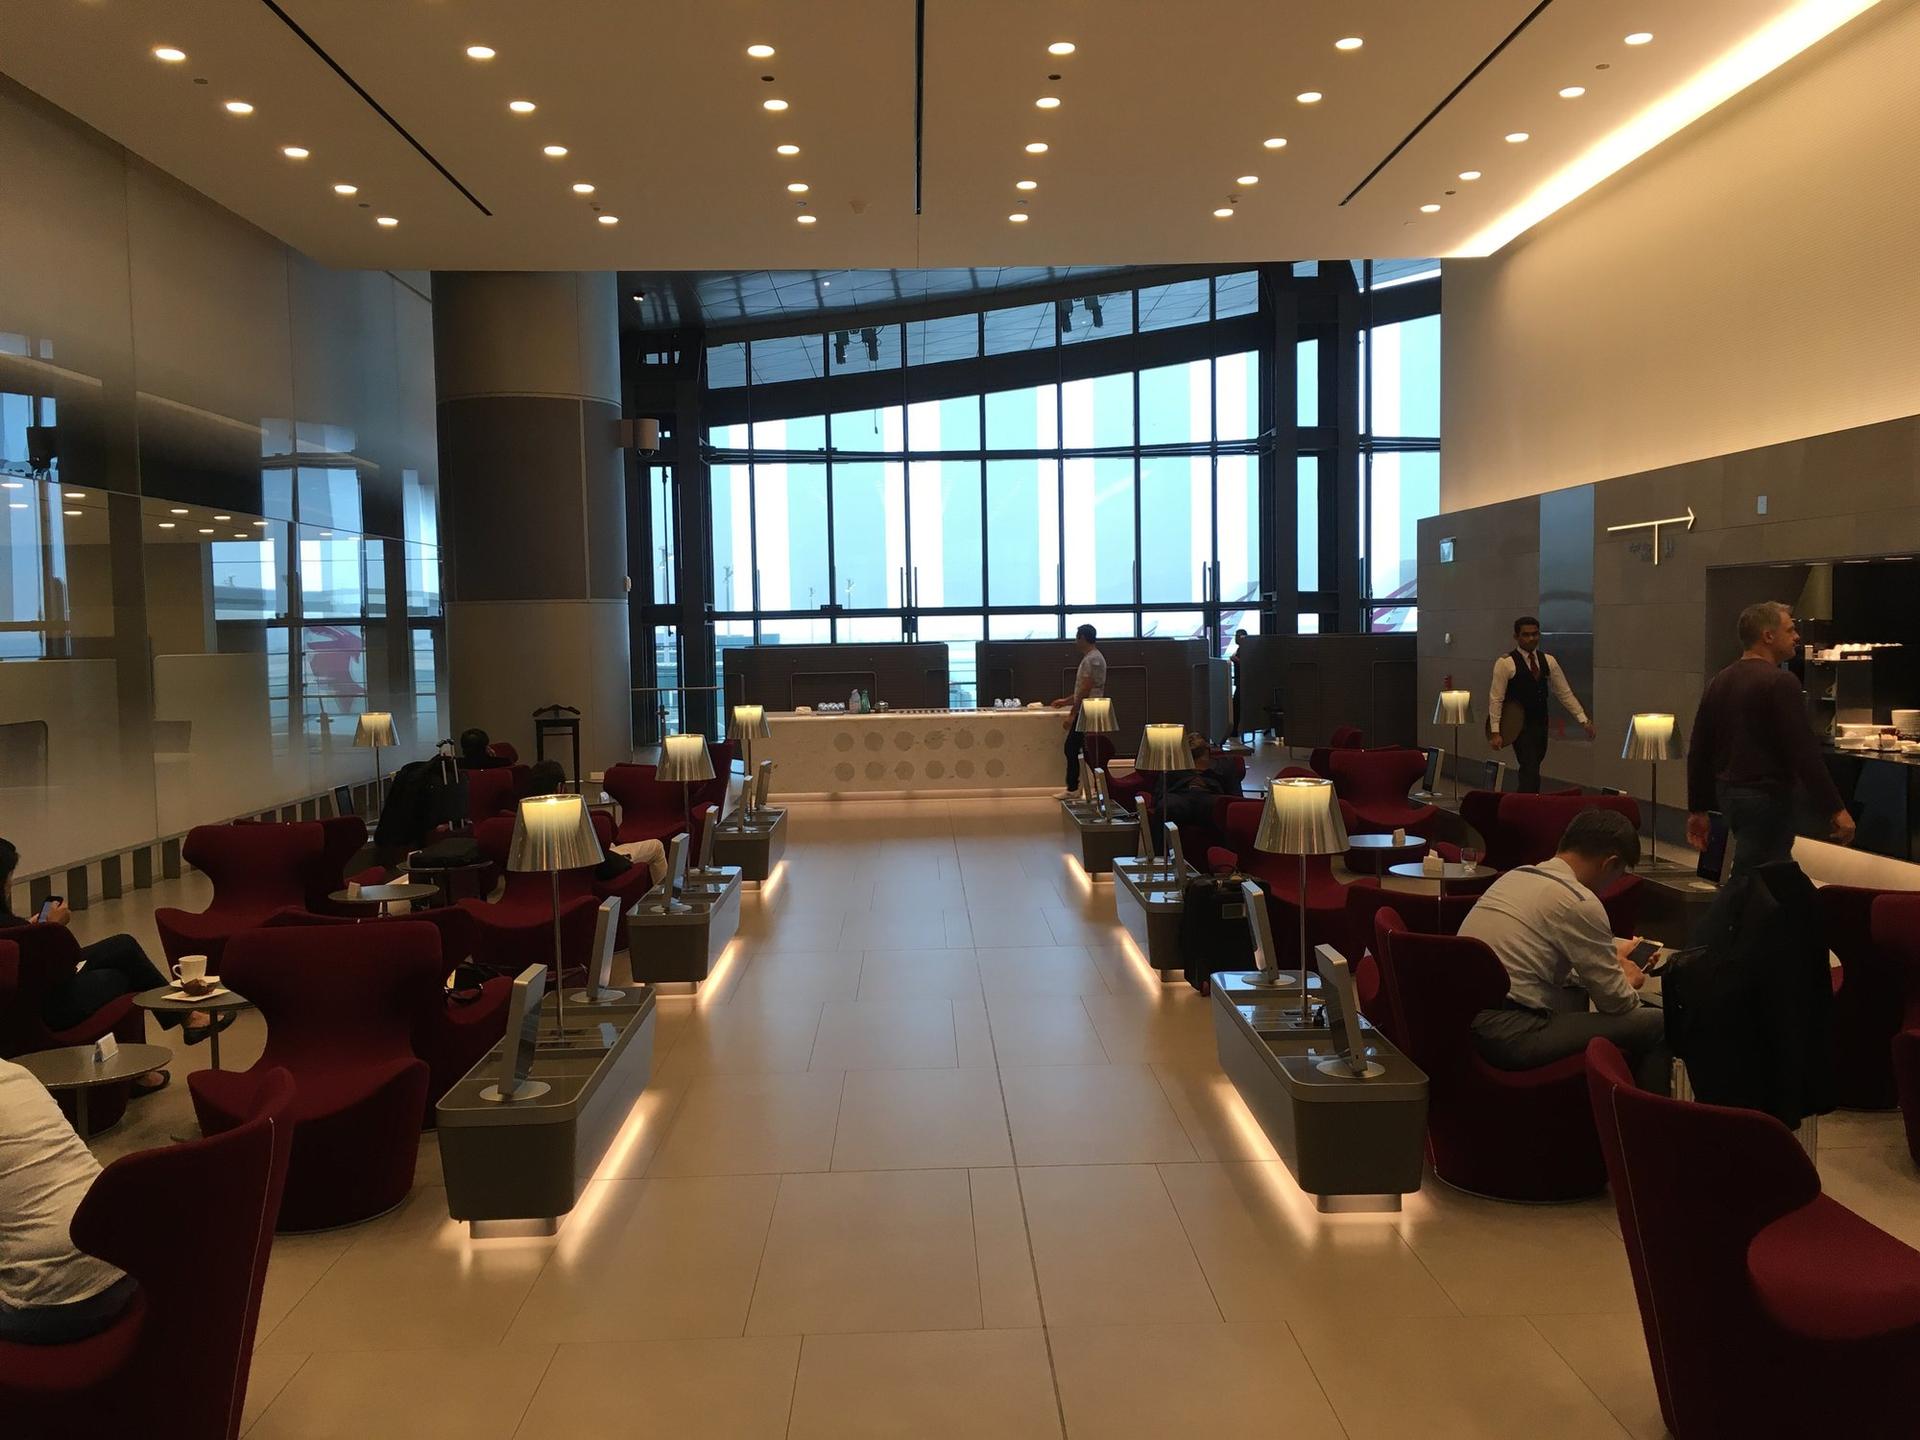 Qatar Airways Al Mourjan Business Class Lounge image 65 of 100